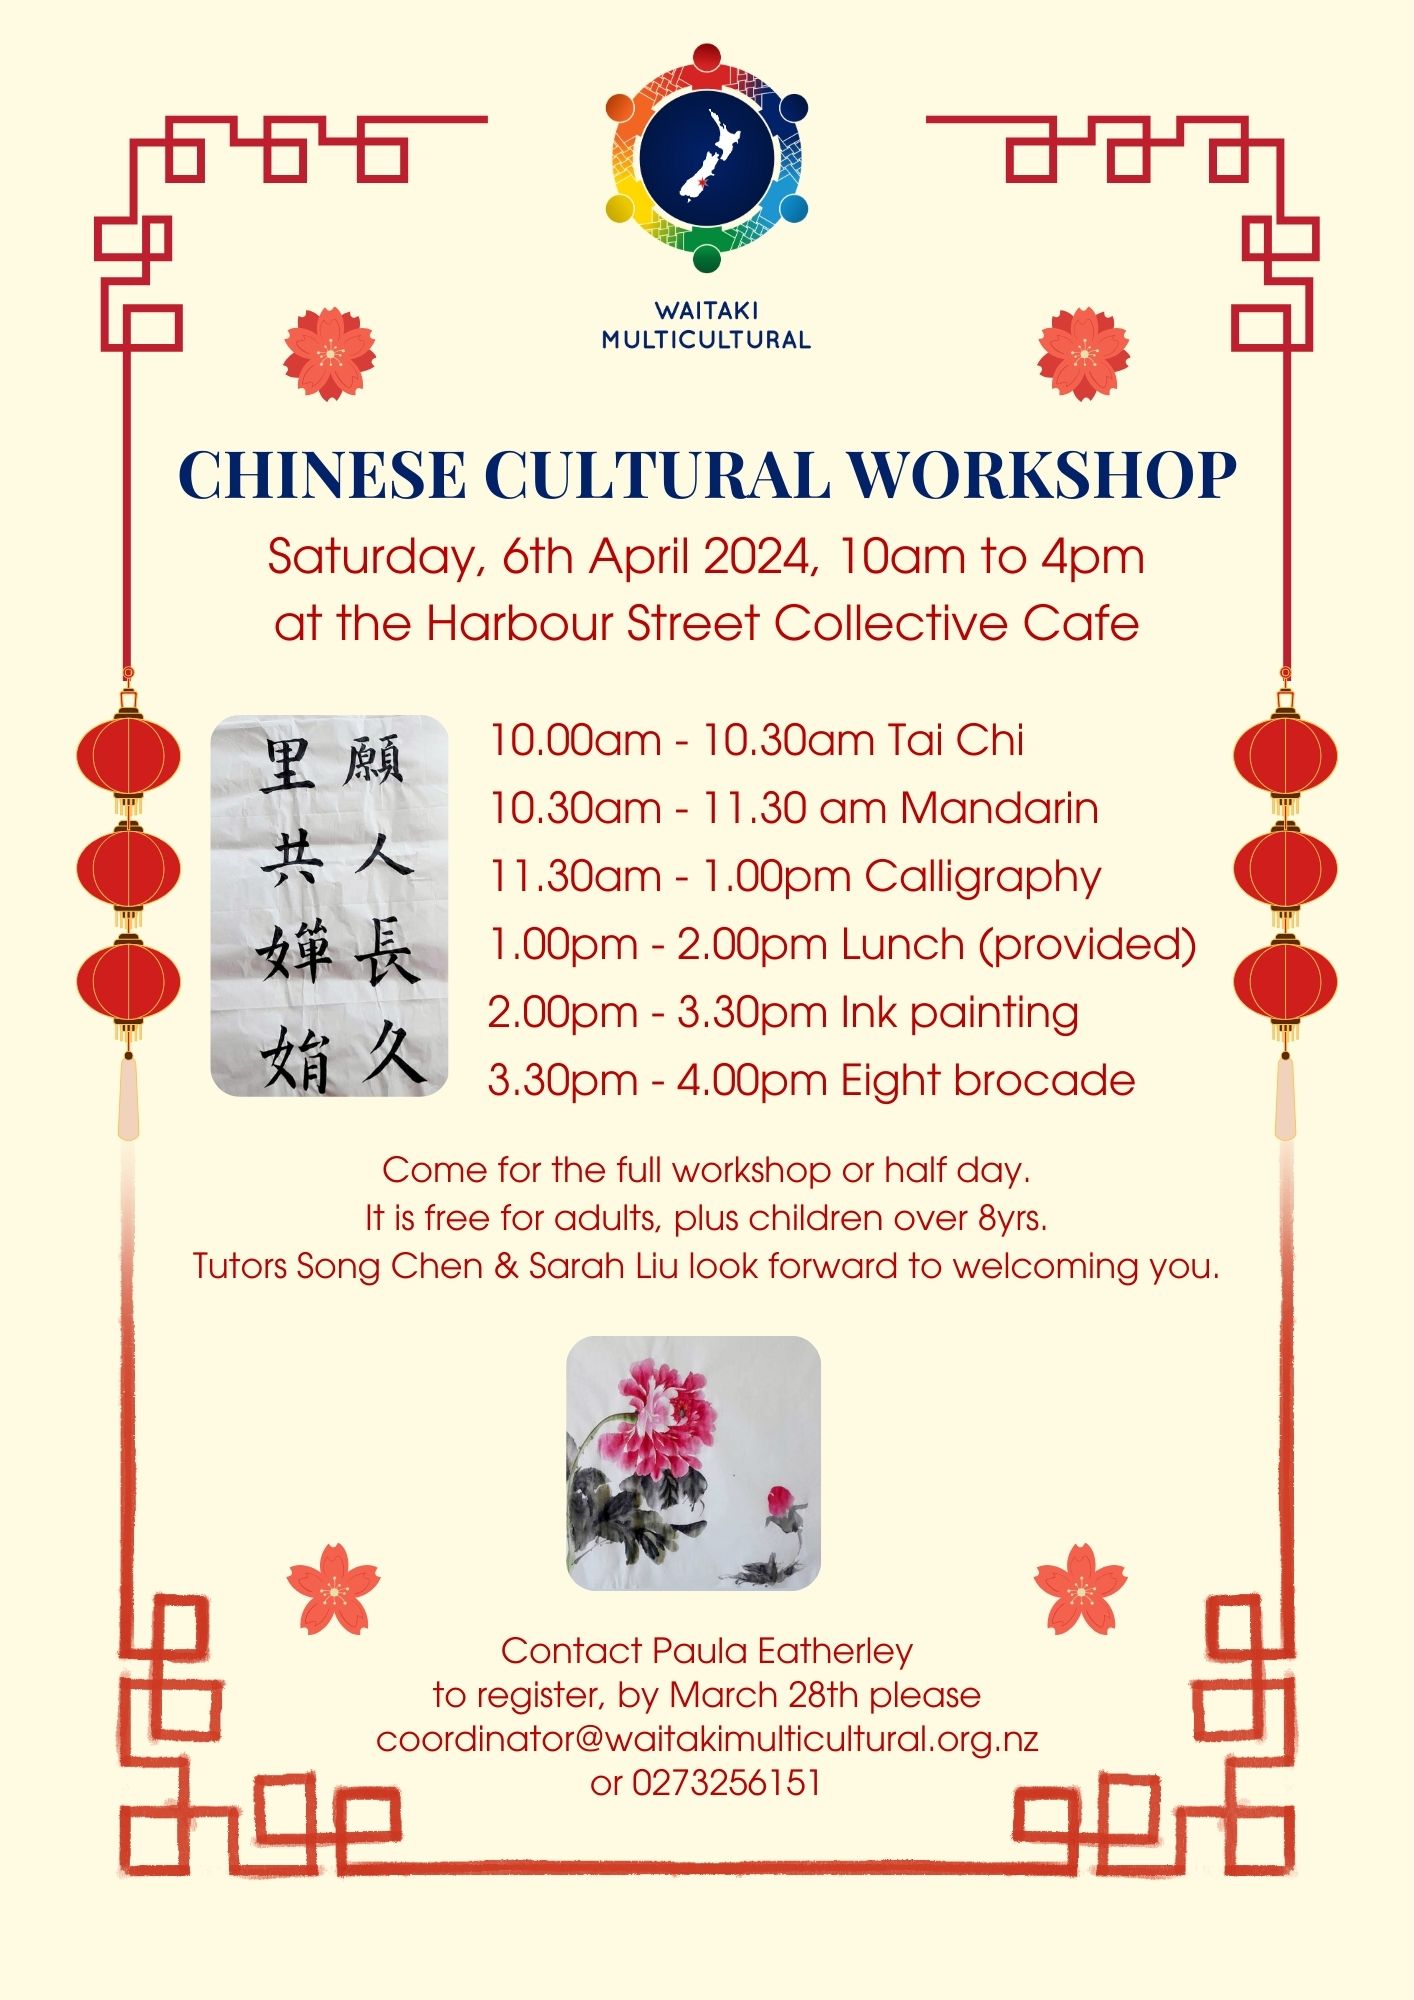 Information flyer for Chinese Cultural Workshop